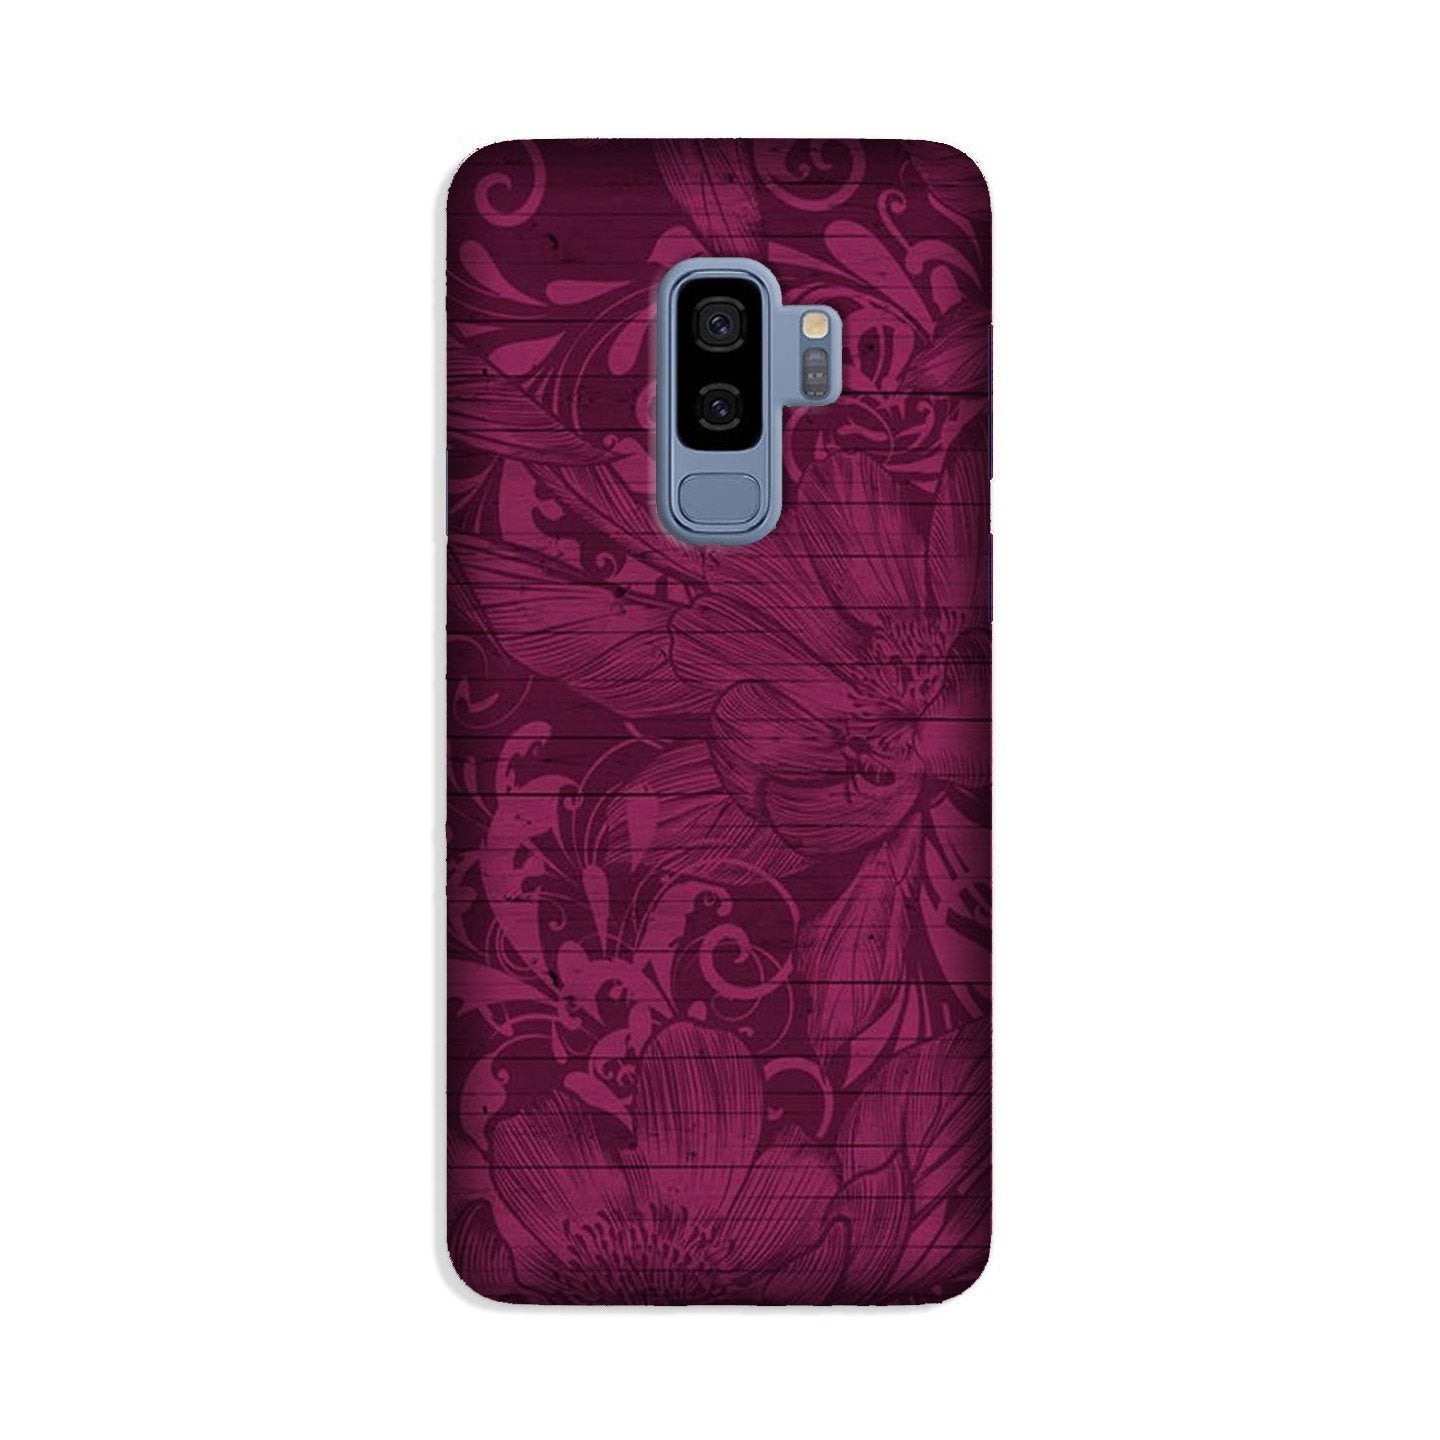 Purple Backround Case for Galaxy S9 Plus